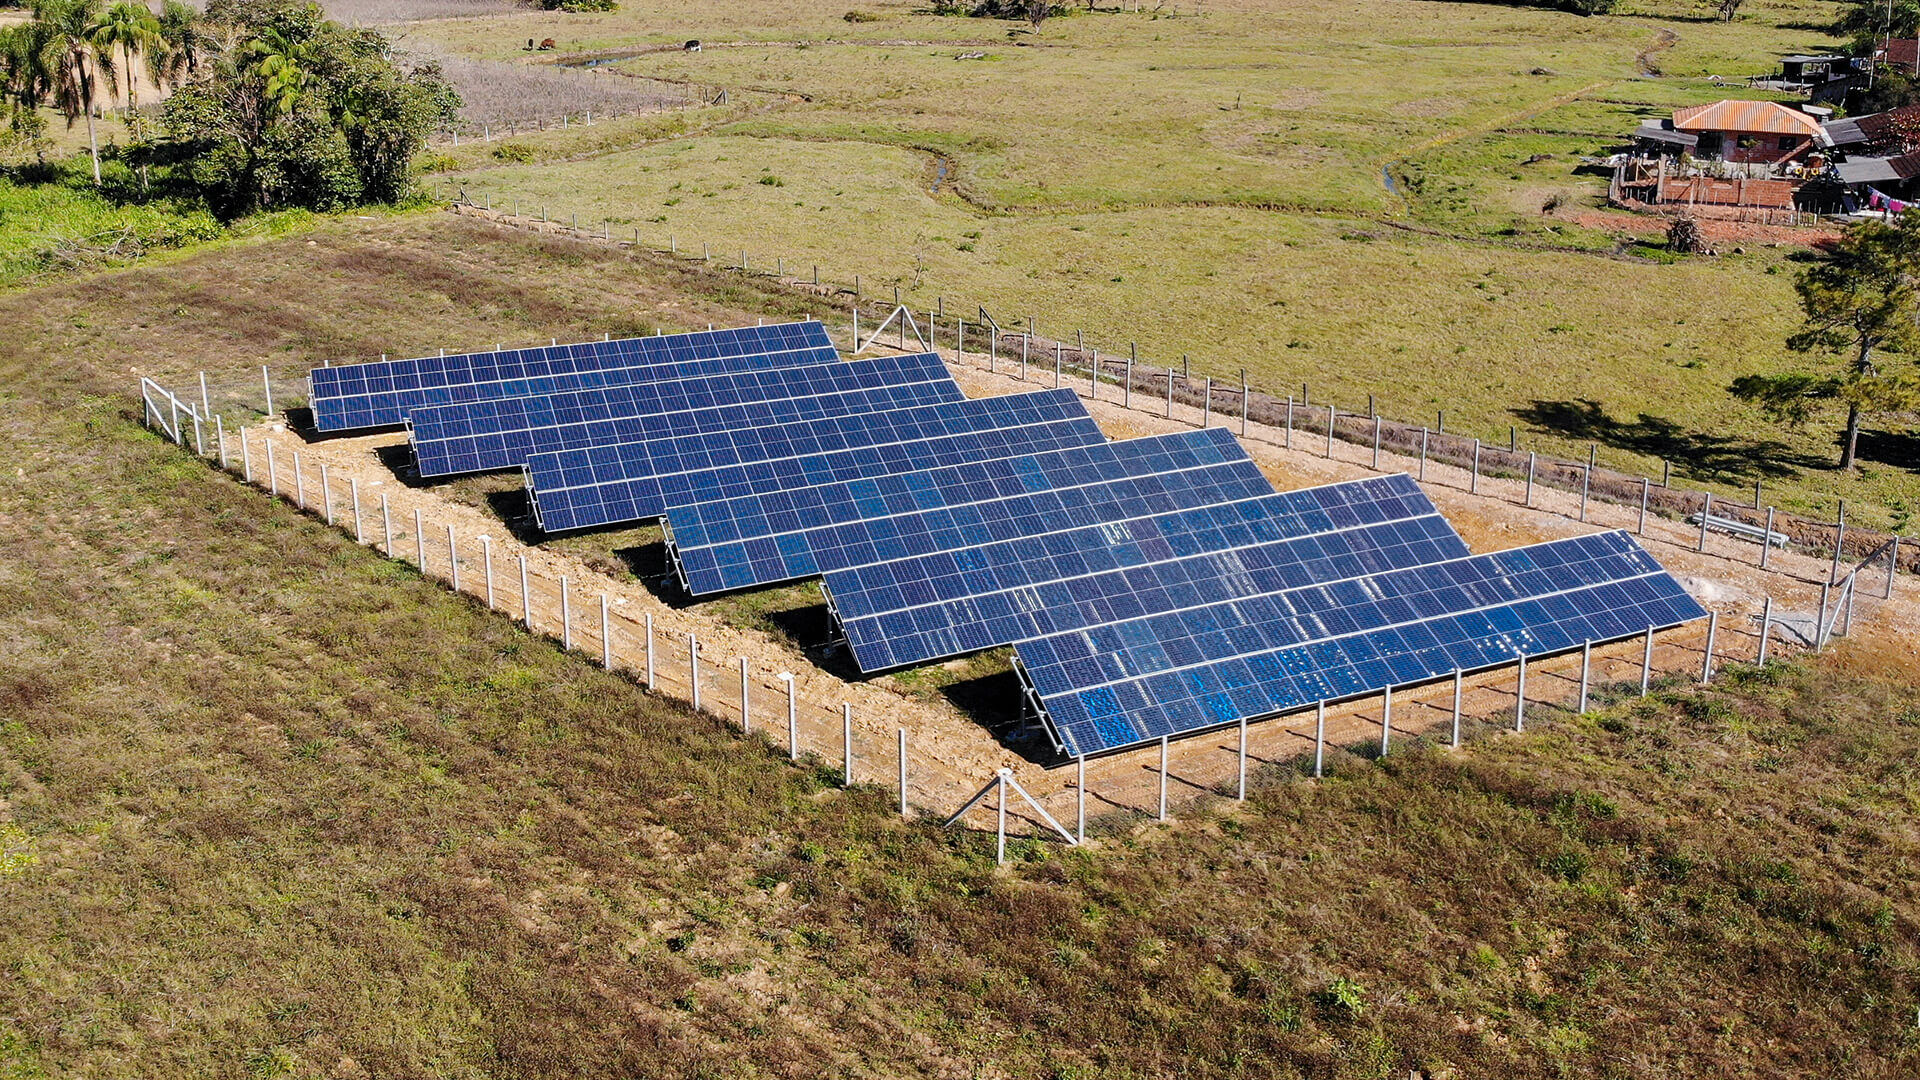 Distribuidor de painel solar no Brasil